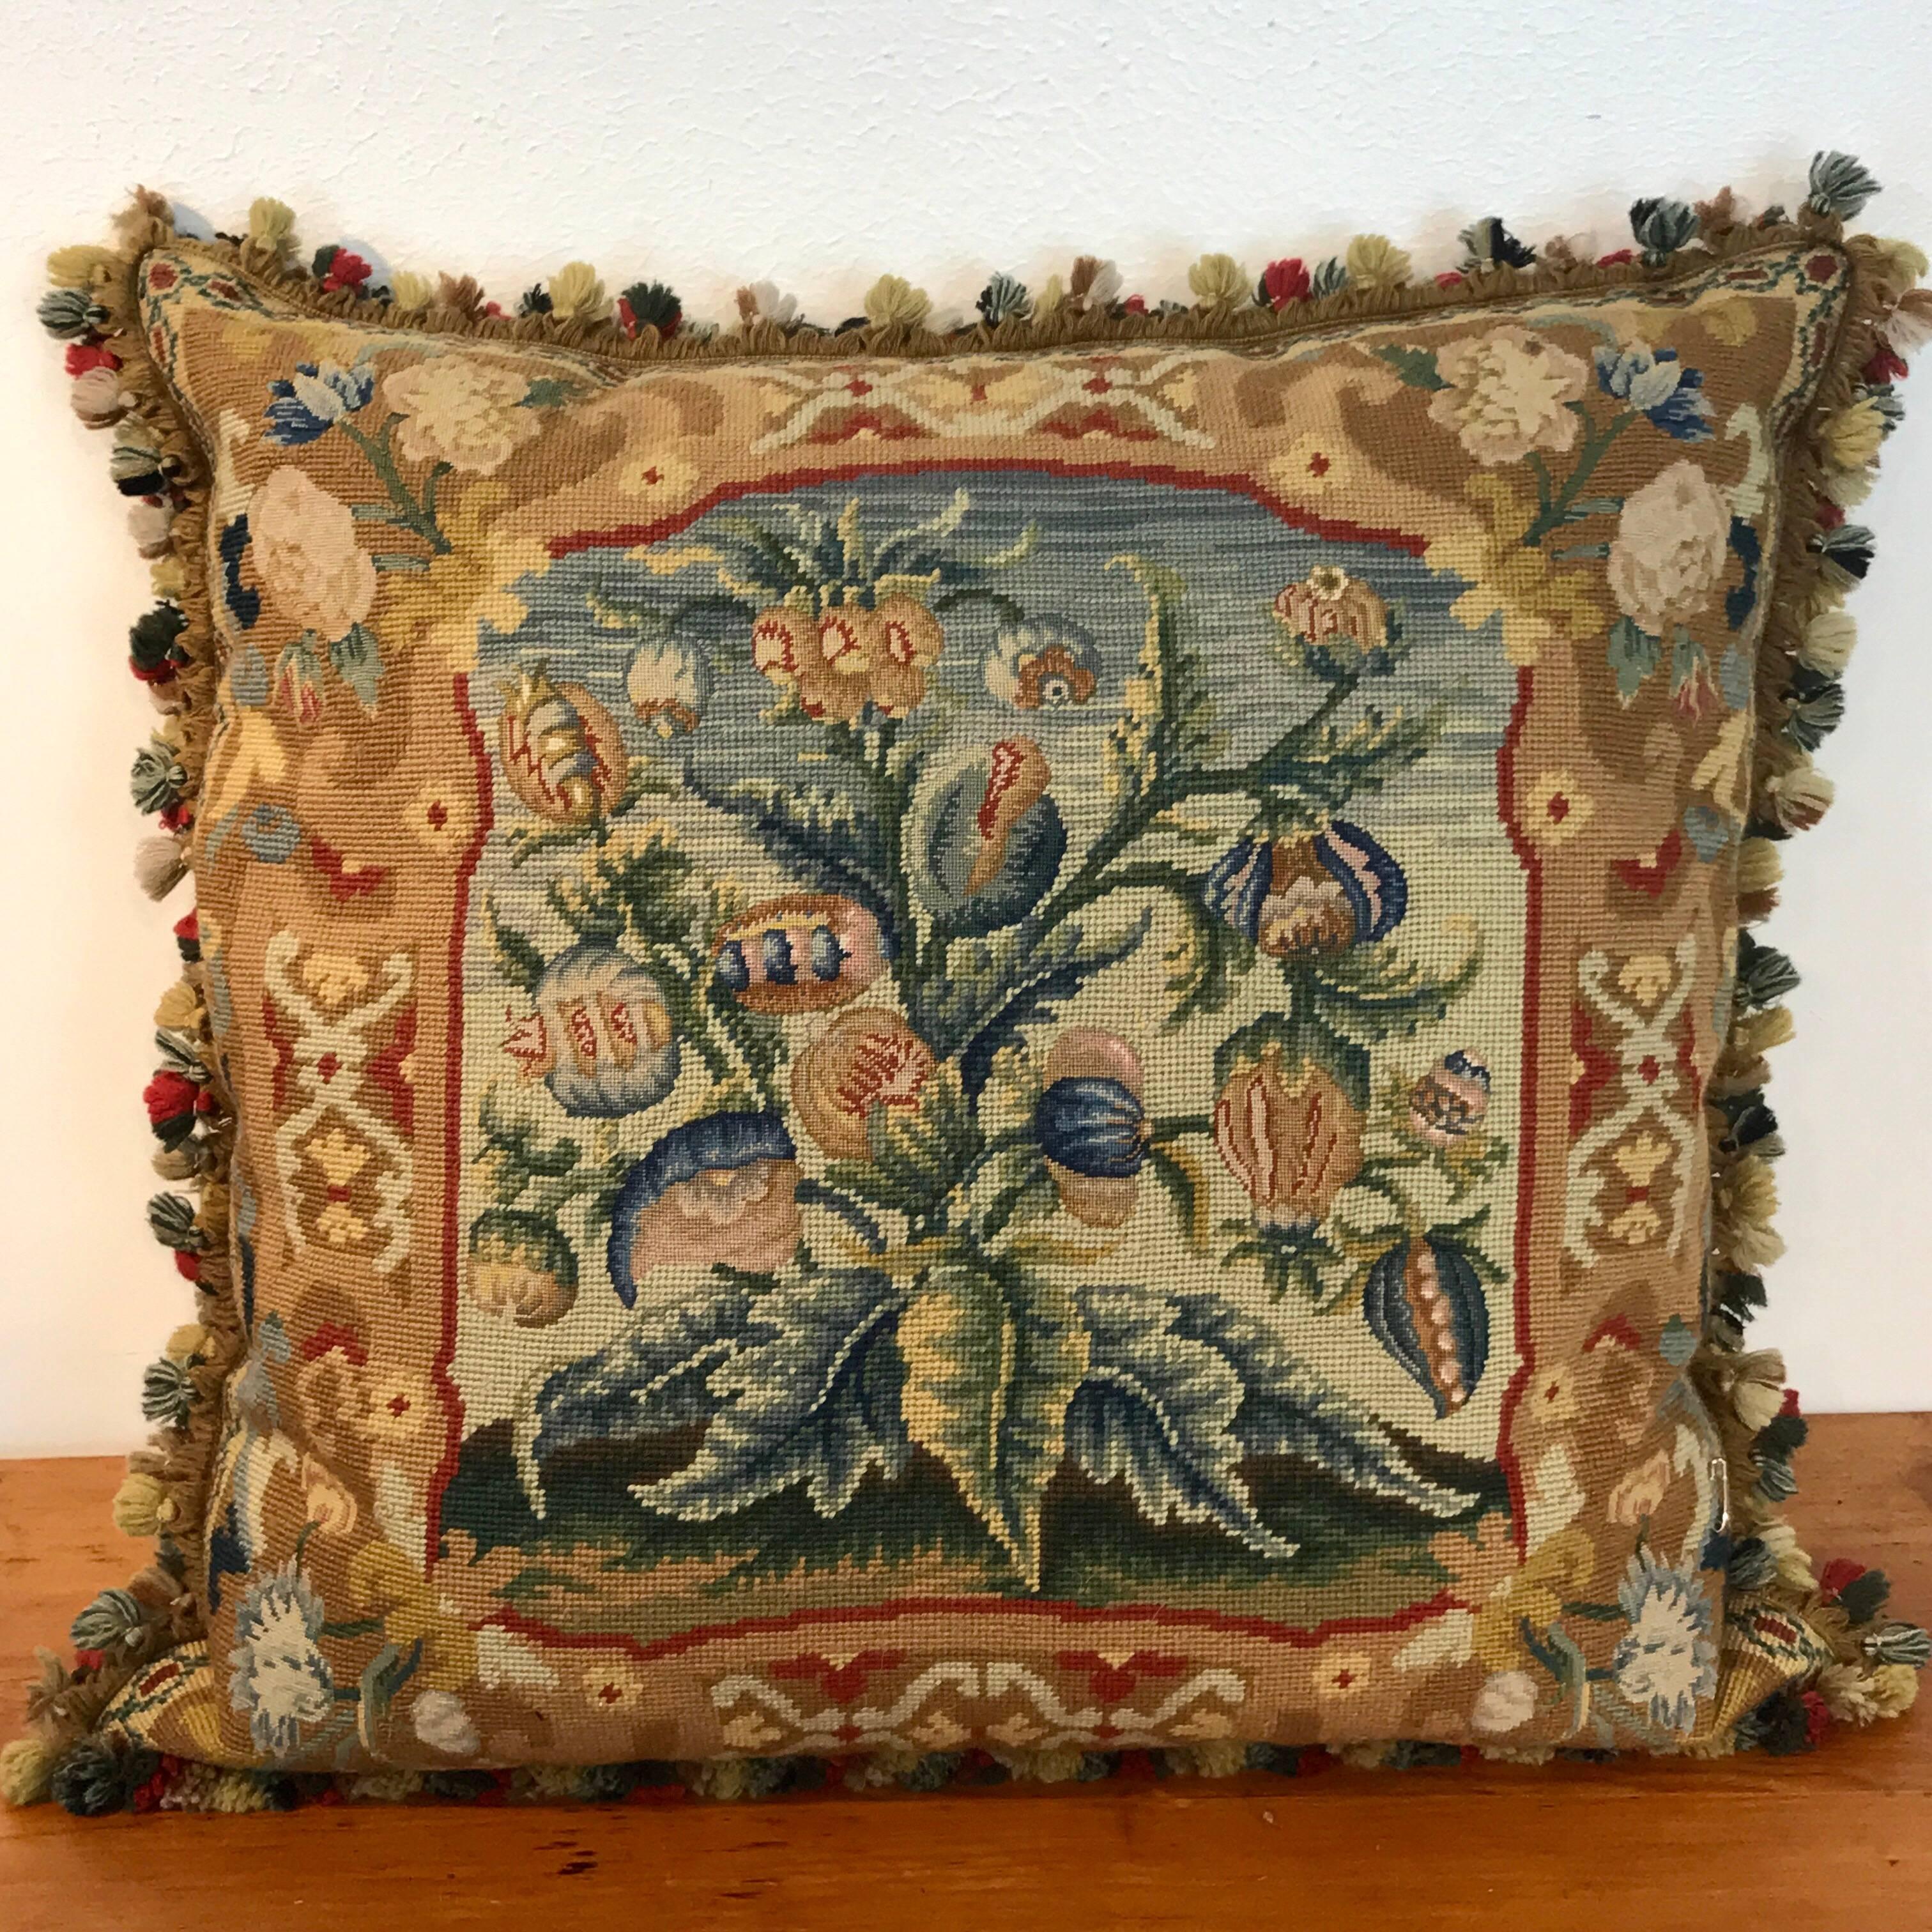 Large antique needlepoint pillow II, lush large botanical motif with tassel fringe. The pillow without the fringe measures 23